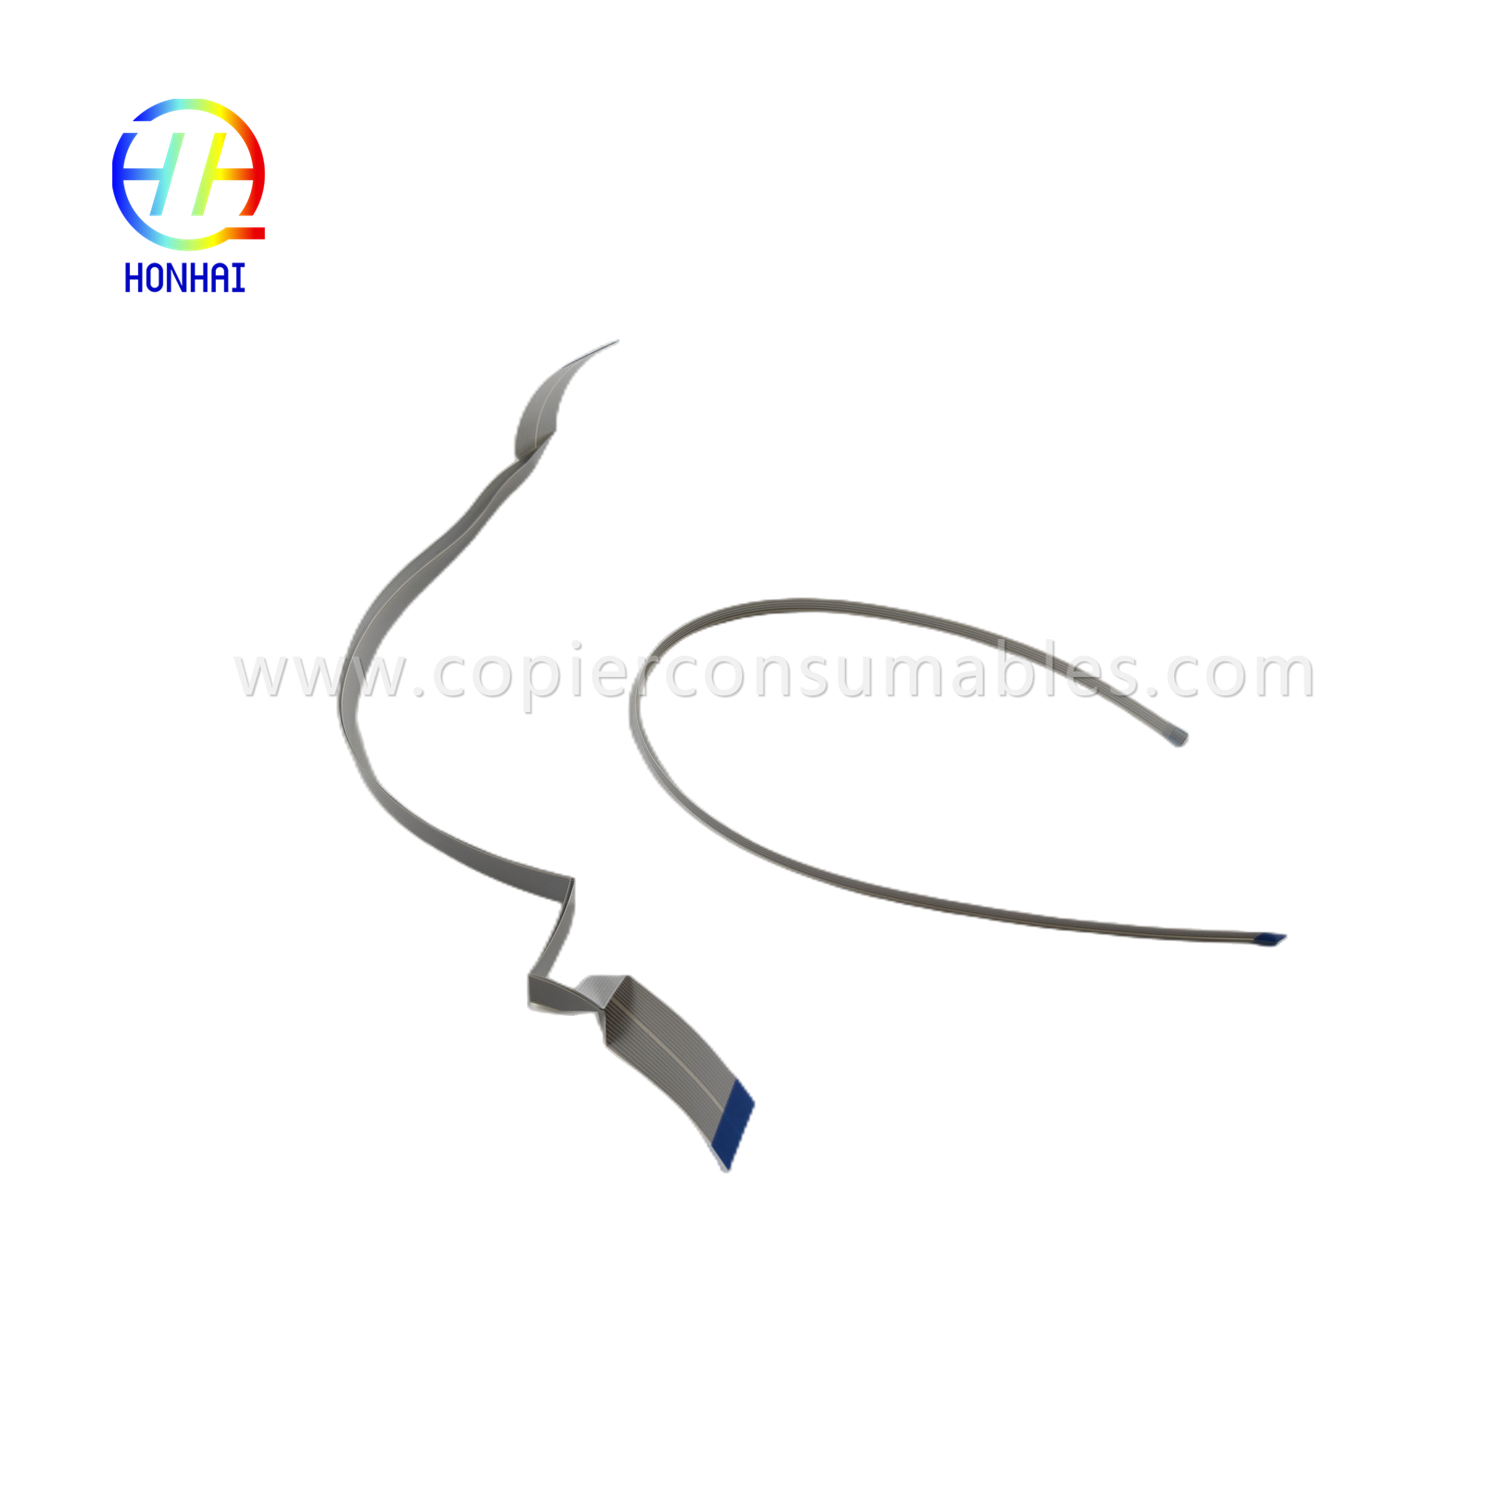 https://www.copierconsumables.com/flex-kabel-voor-epson-l1110-l3110-l3210-l3150-l3250-l5190-l5290-head-cable-product/